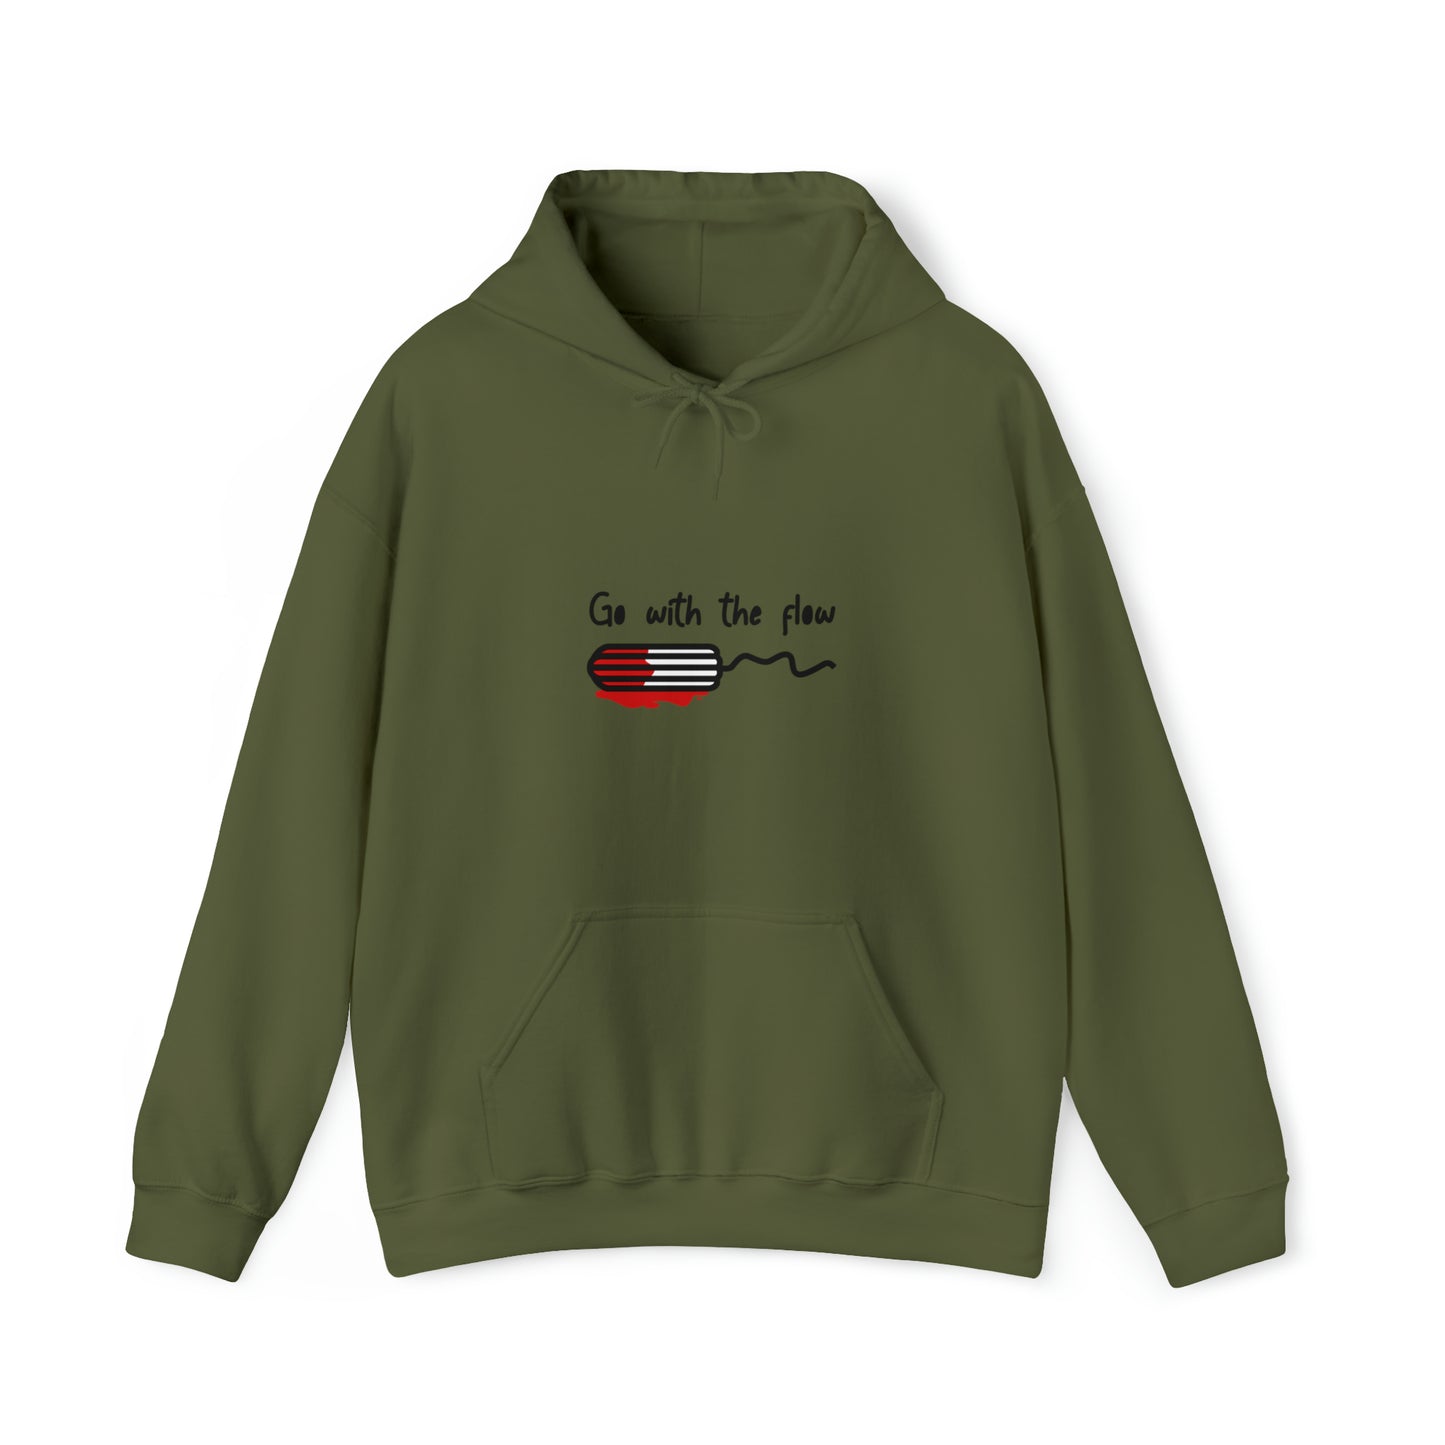 Custom Parody Hooded Sweatshirt, Go with the flow design